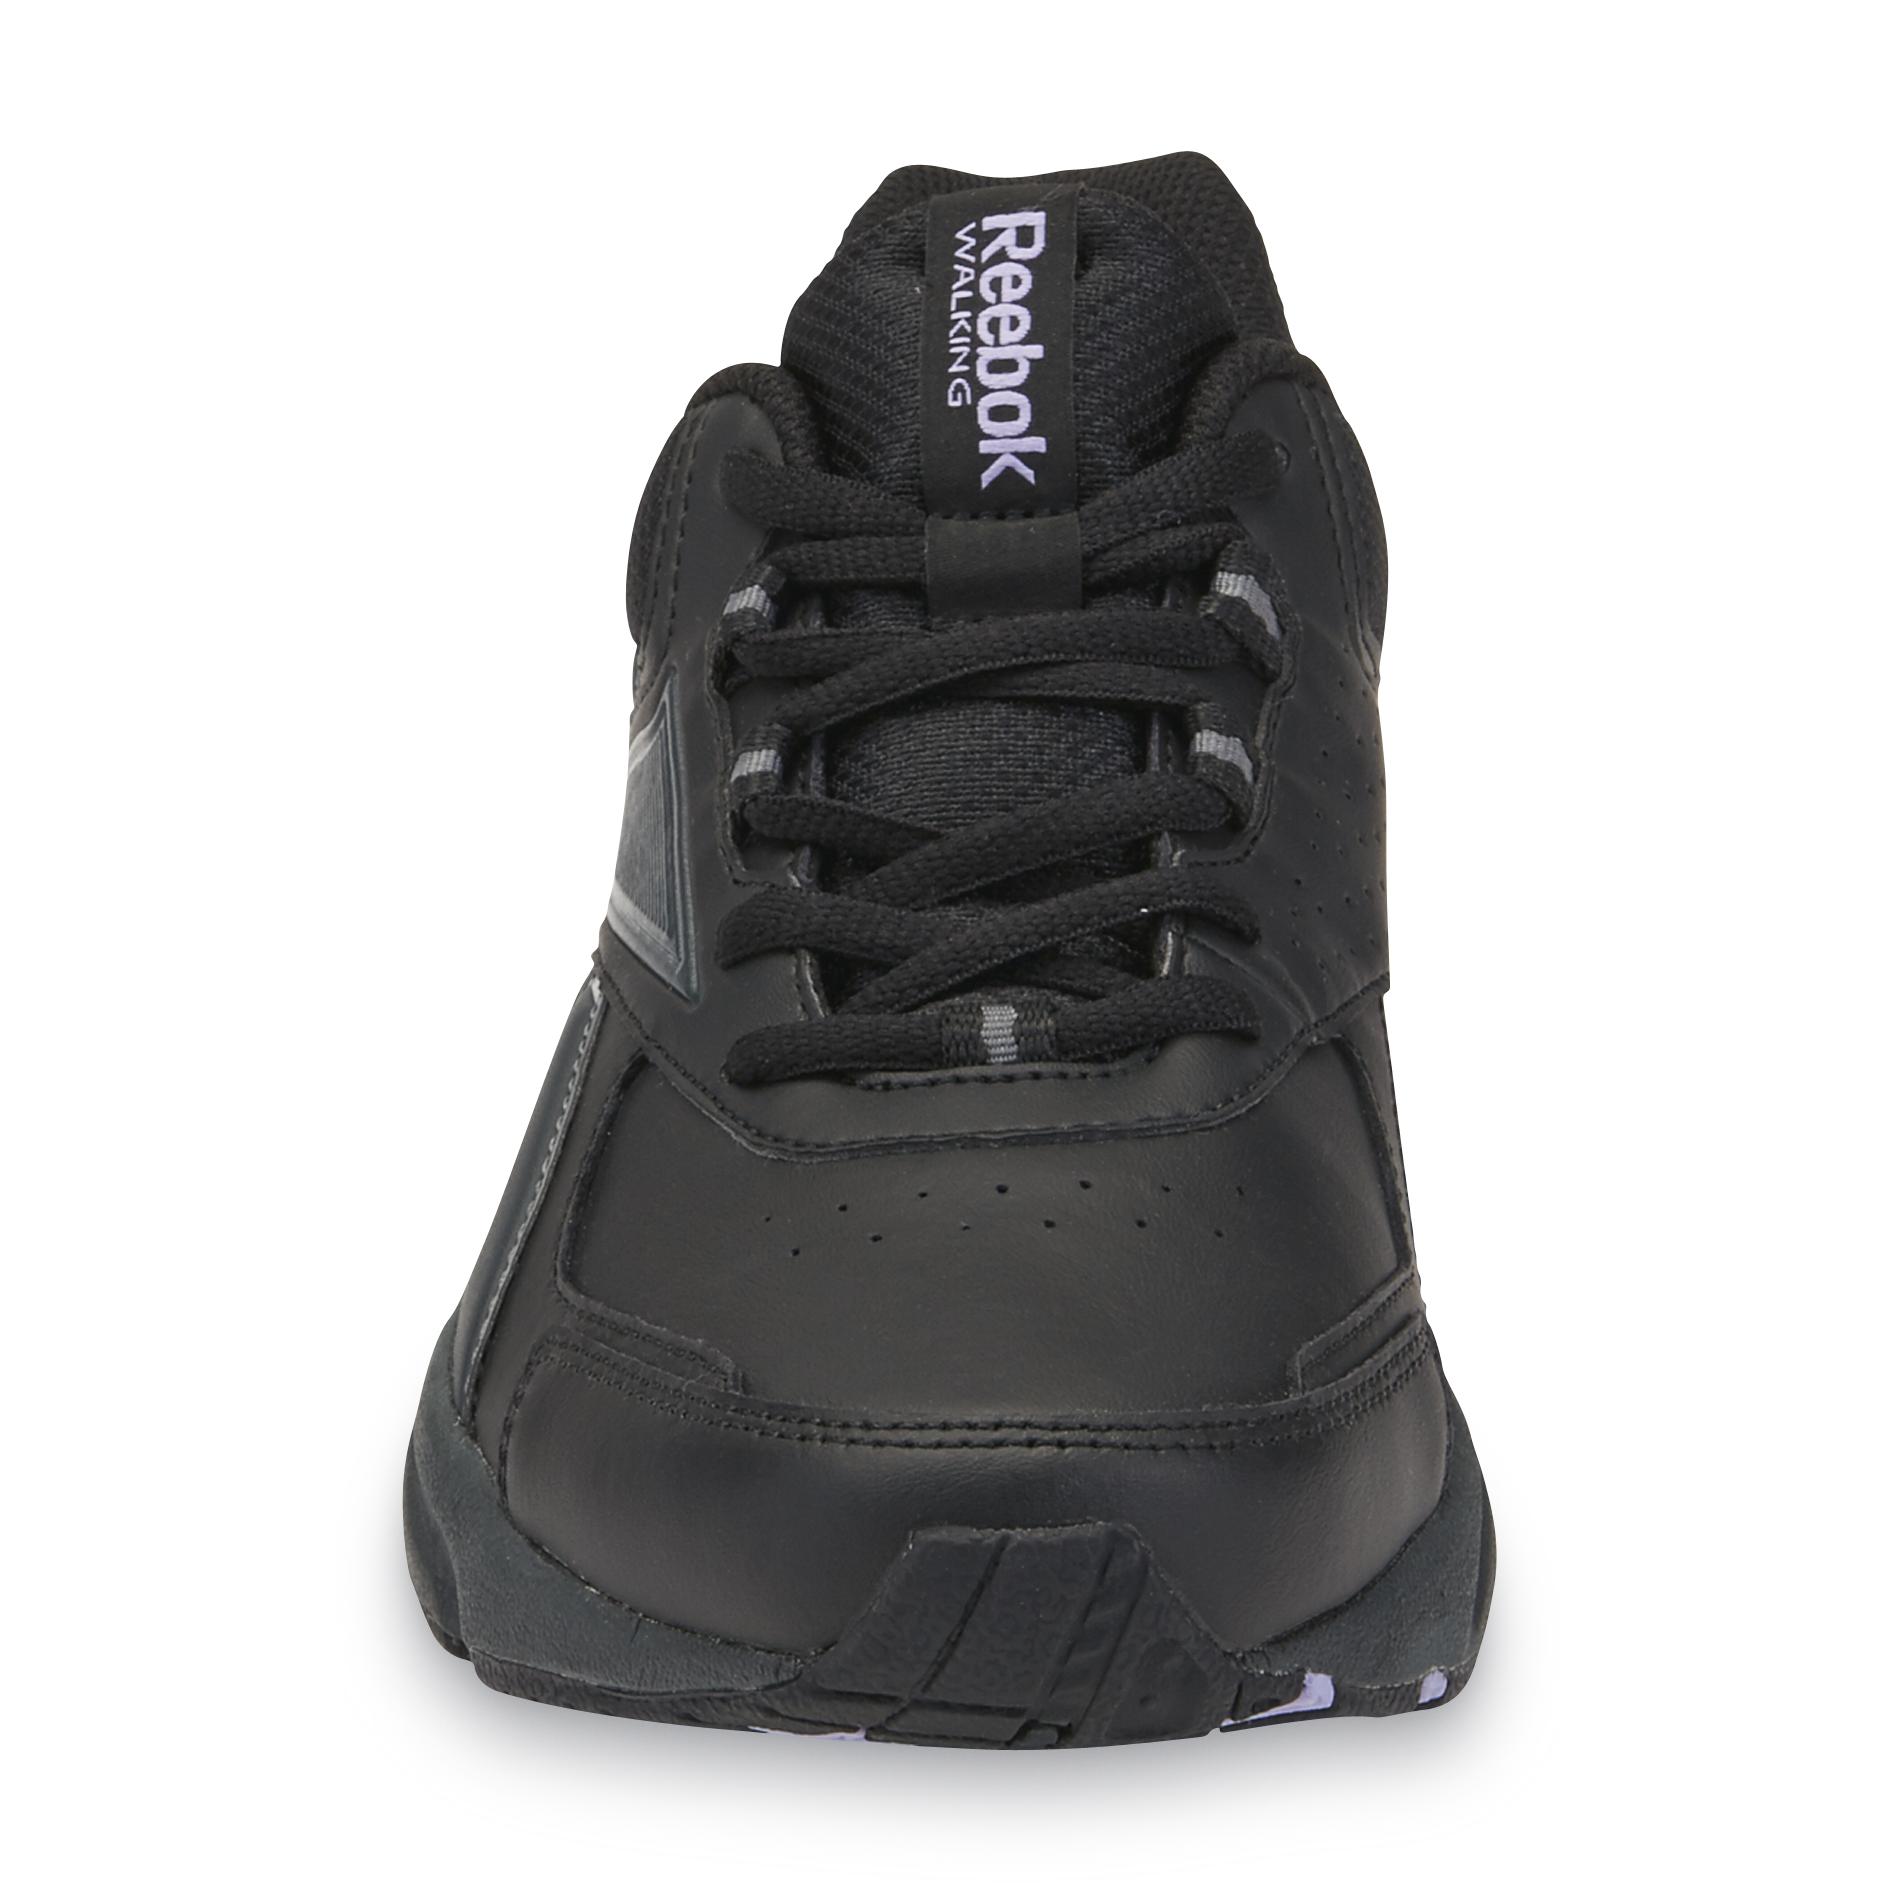 Reebok Women's Daily Cushion RS Black Walking Shoes